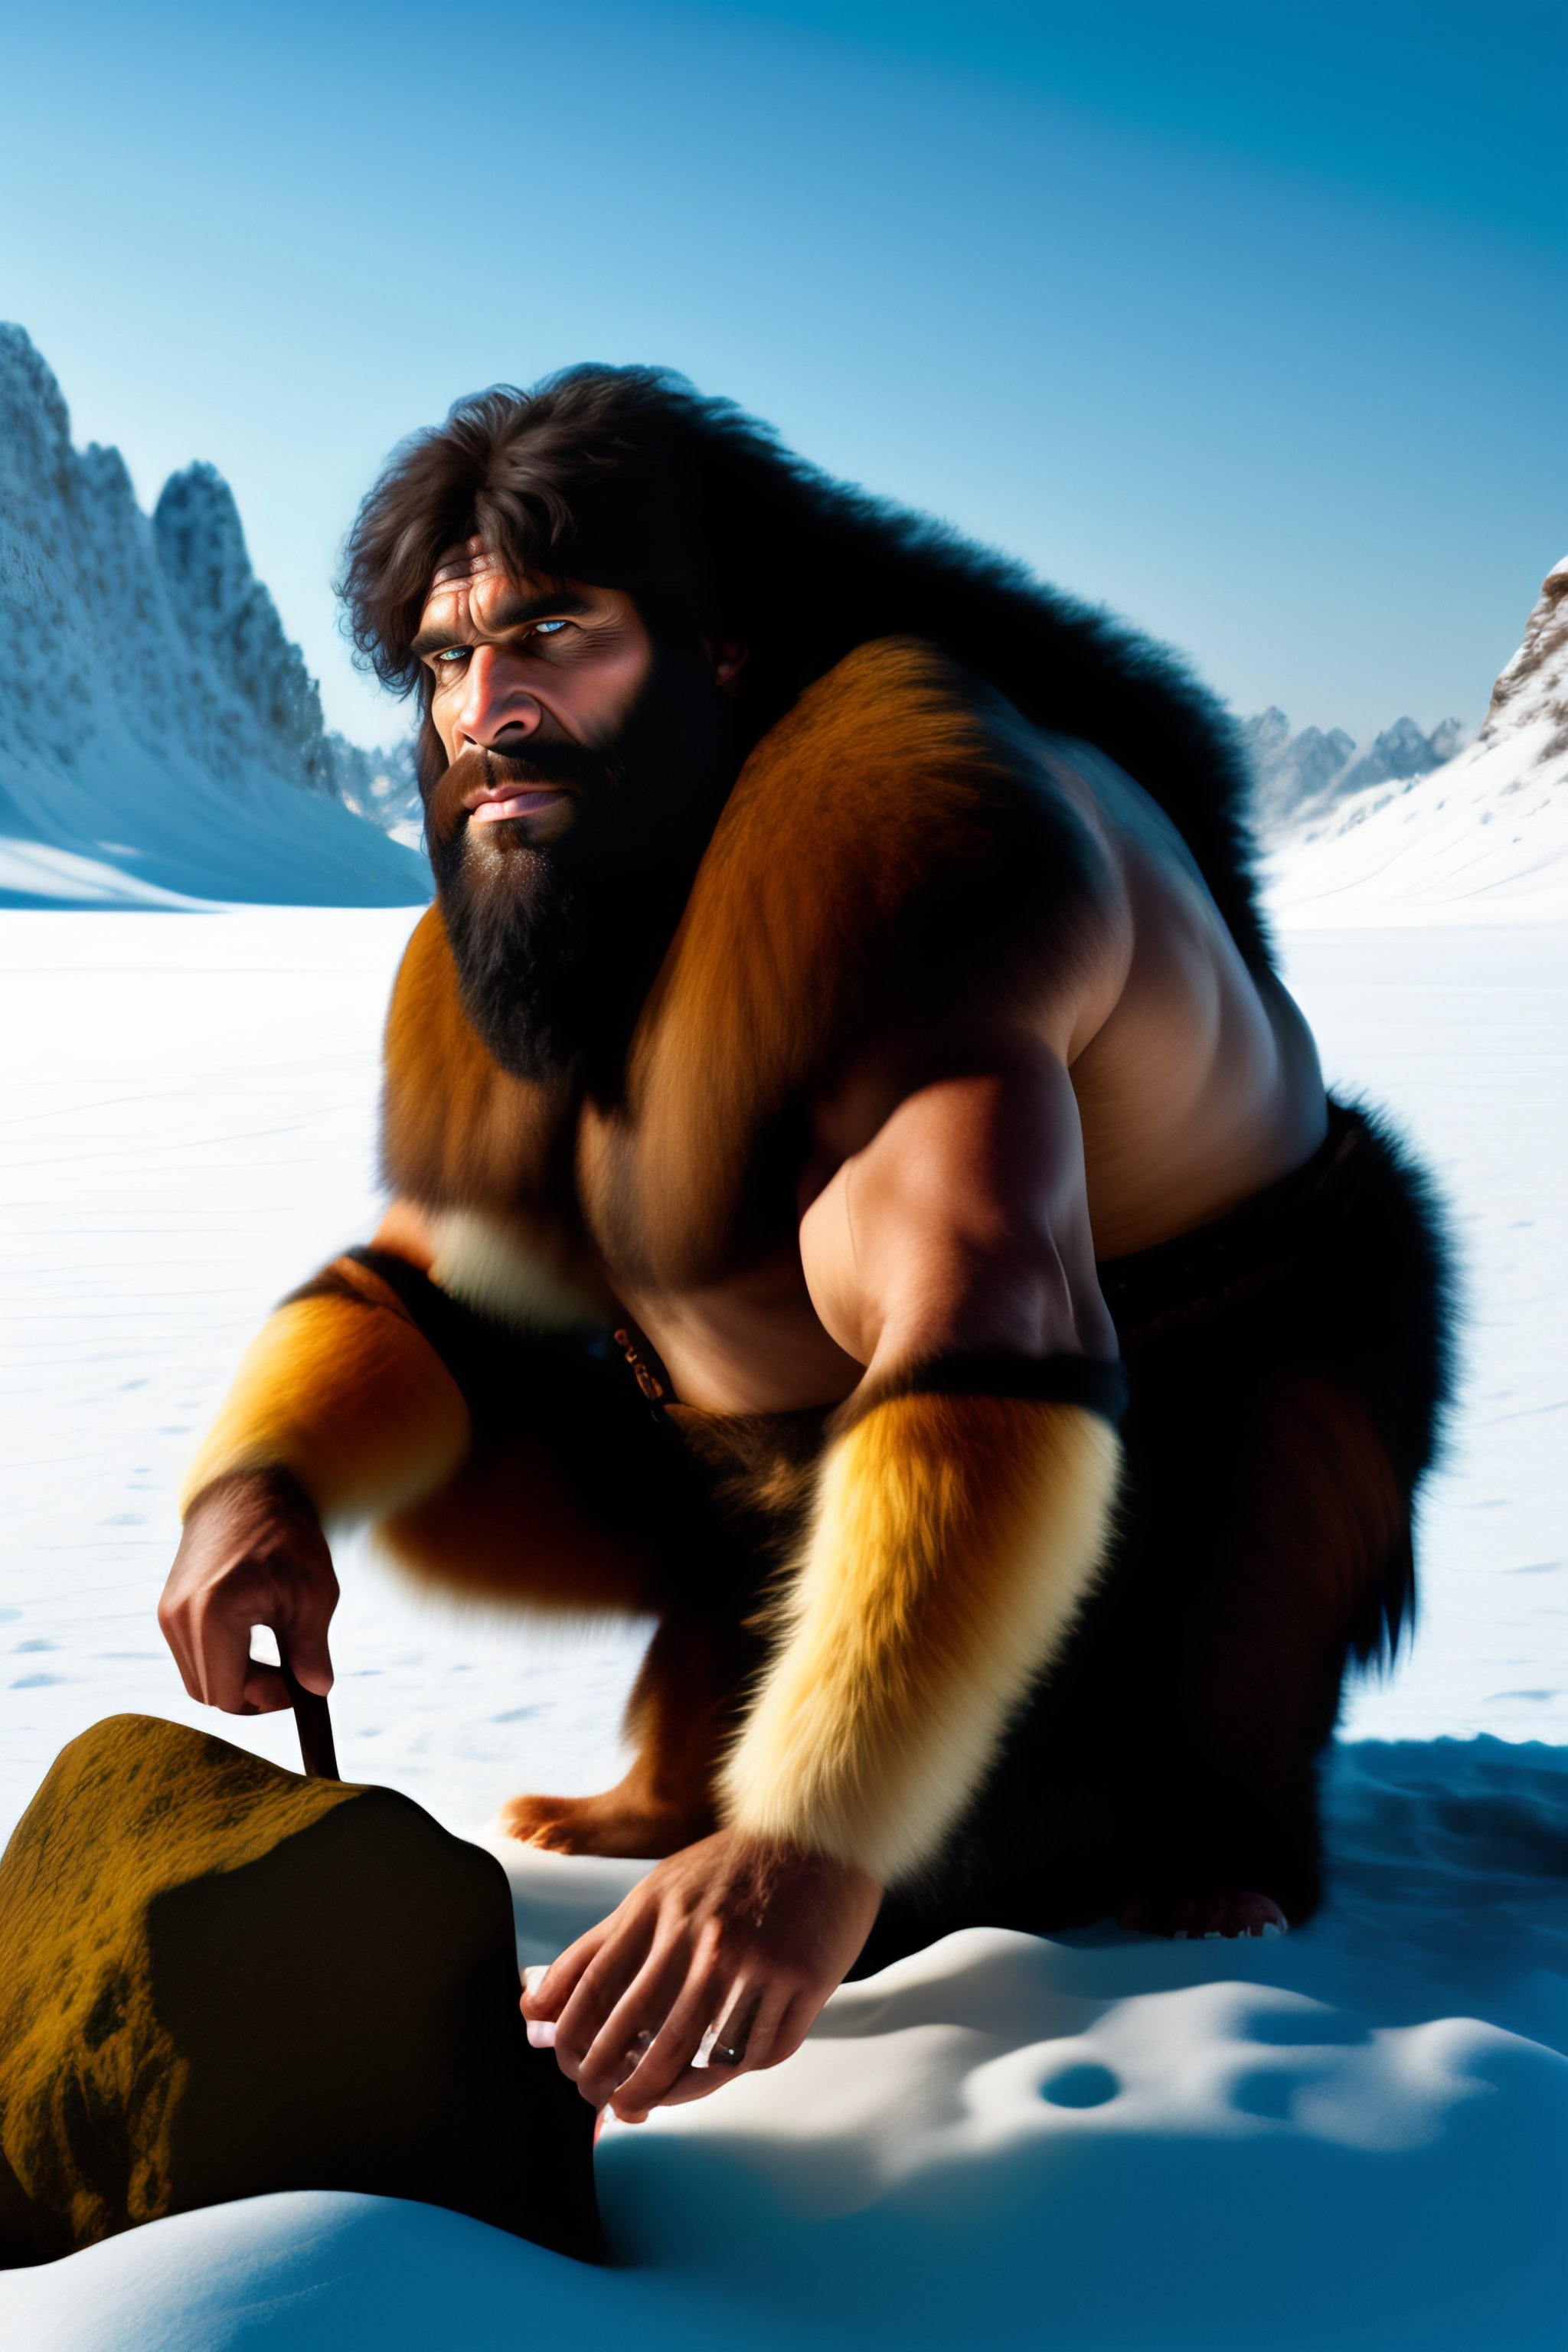 frozen neanderthal